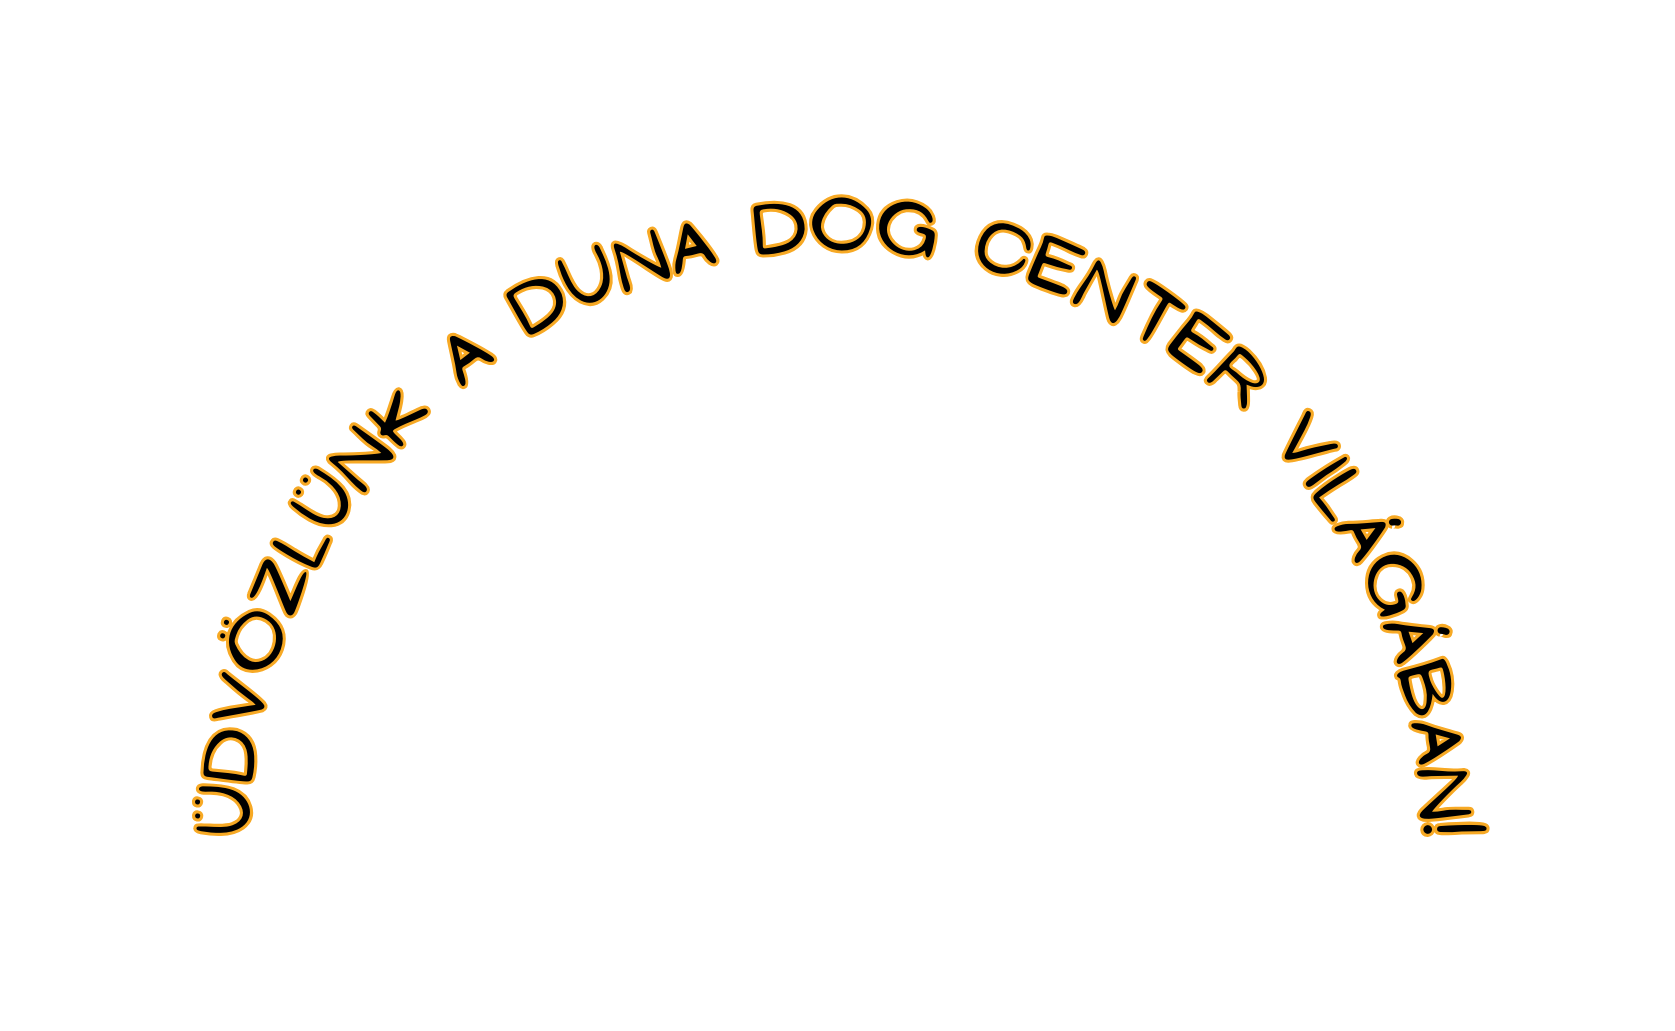 Üdvözlünk a Duna Dog Center világában